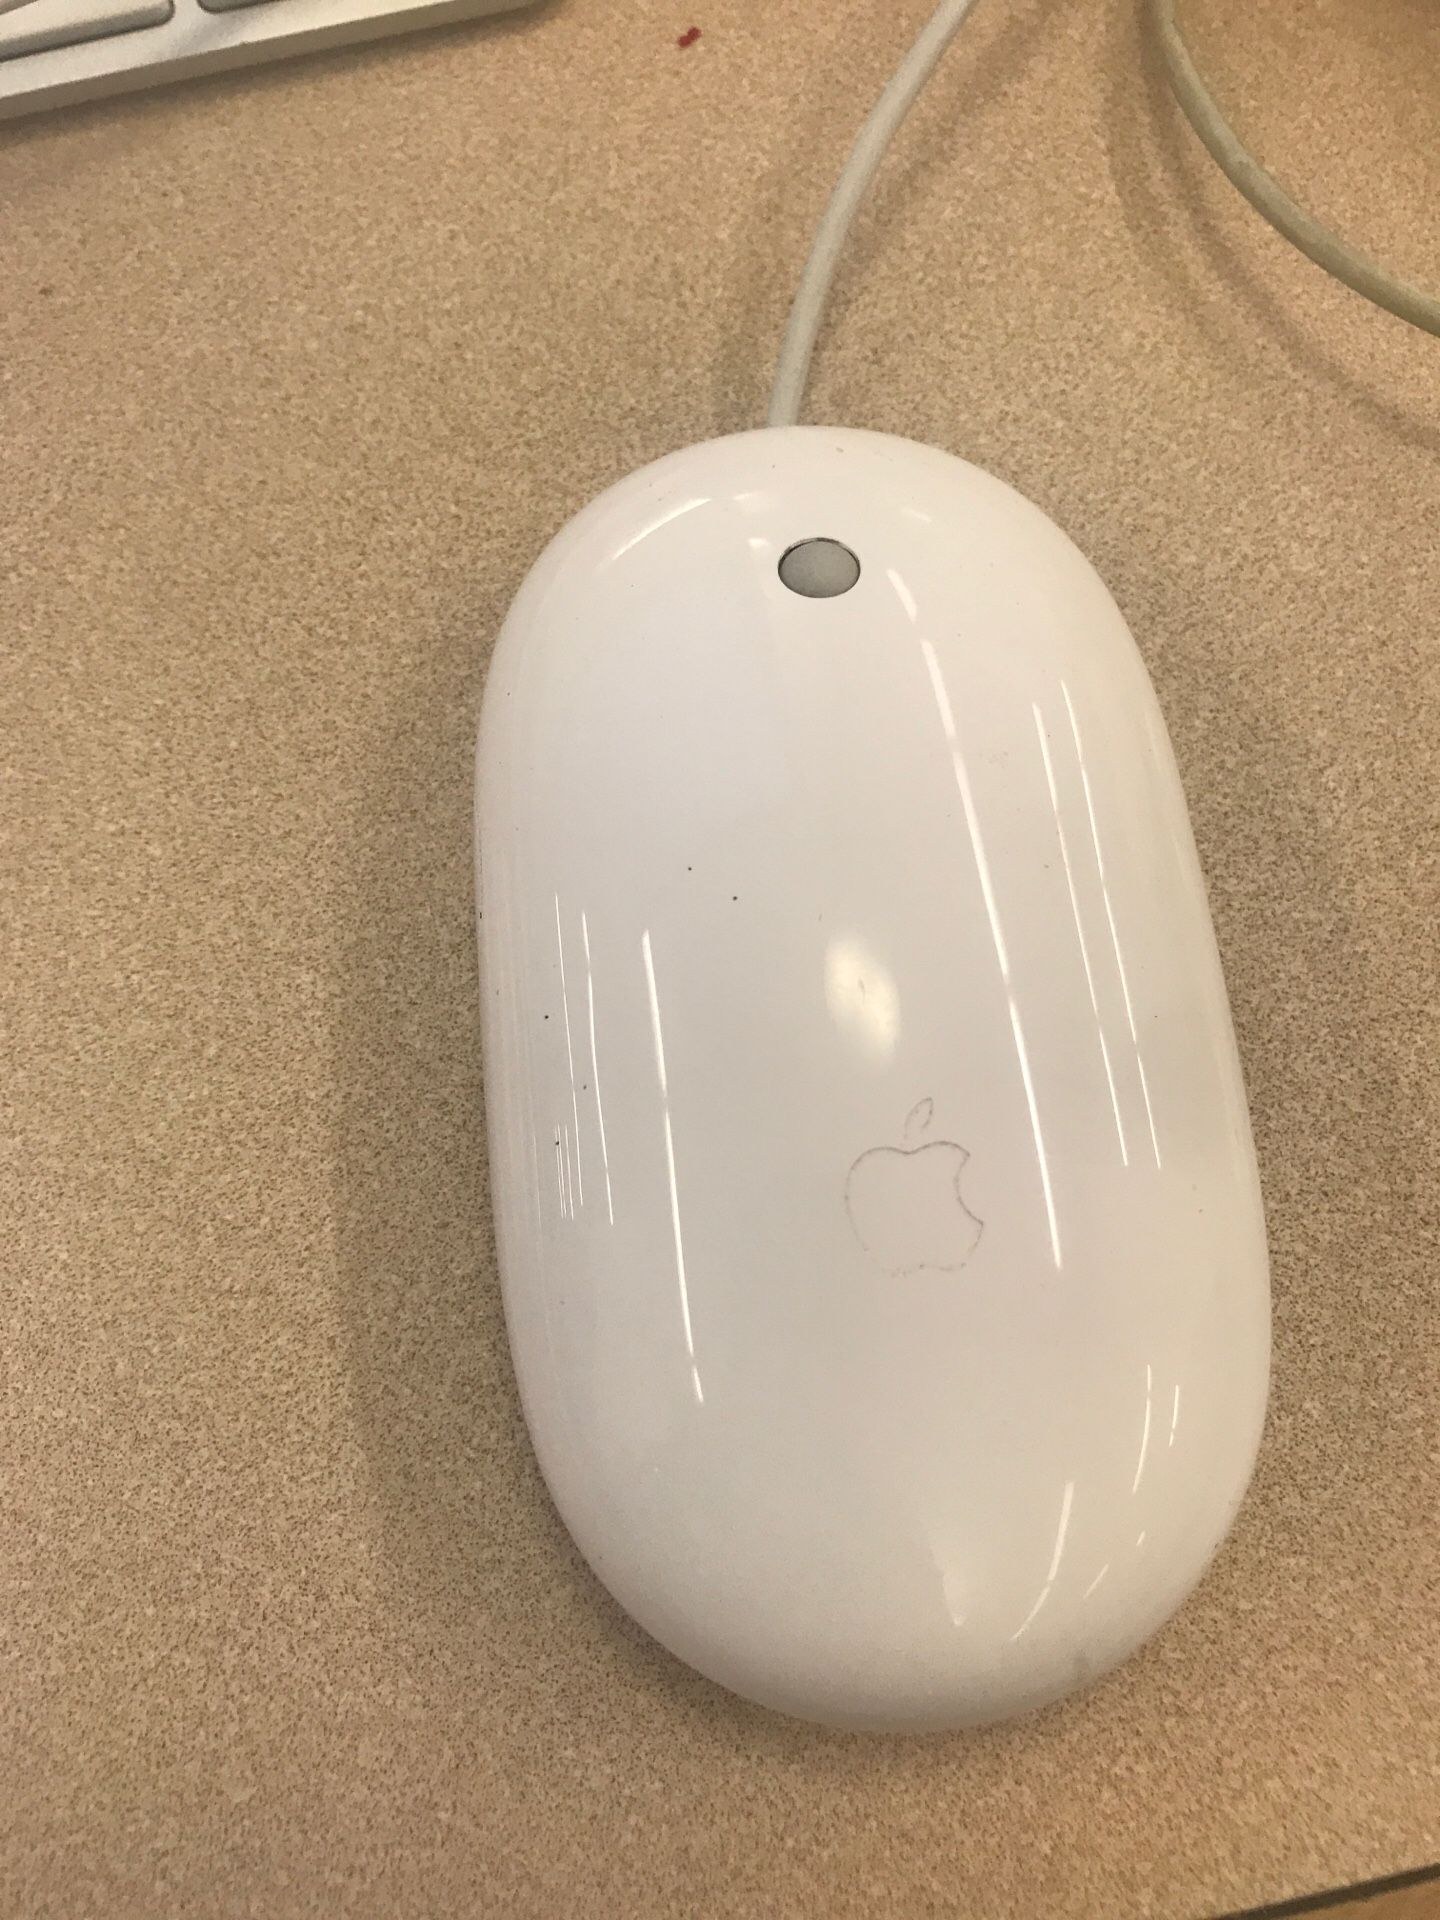 Apple USB optical mouse